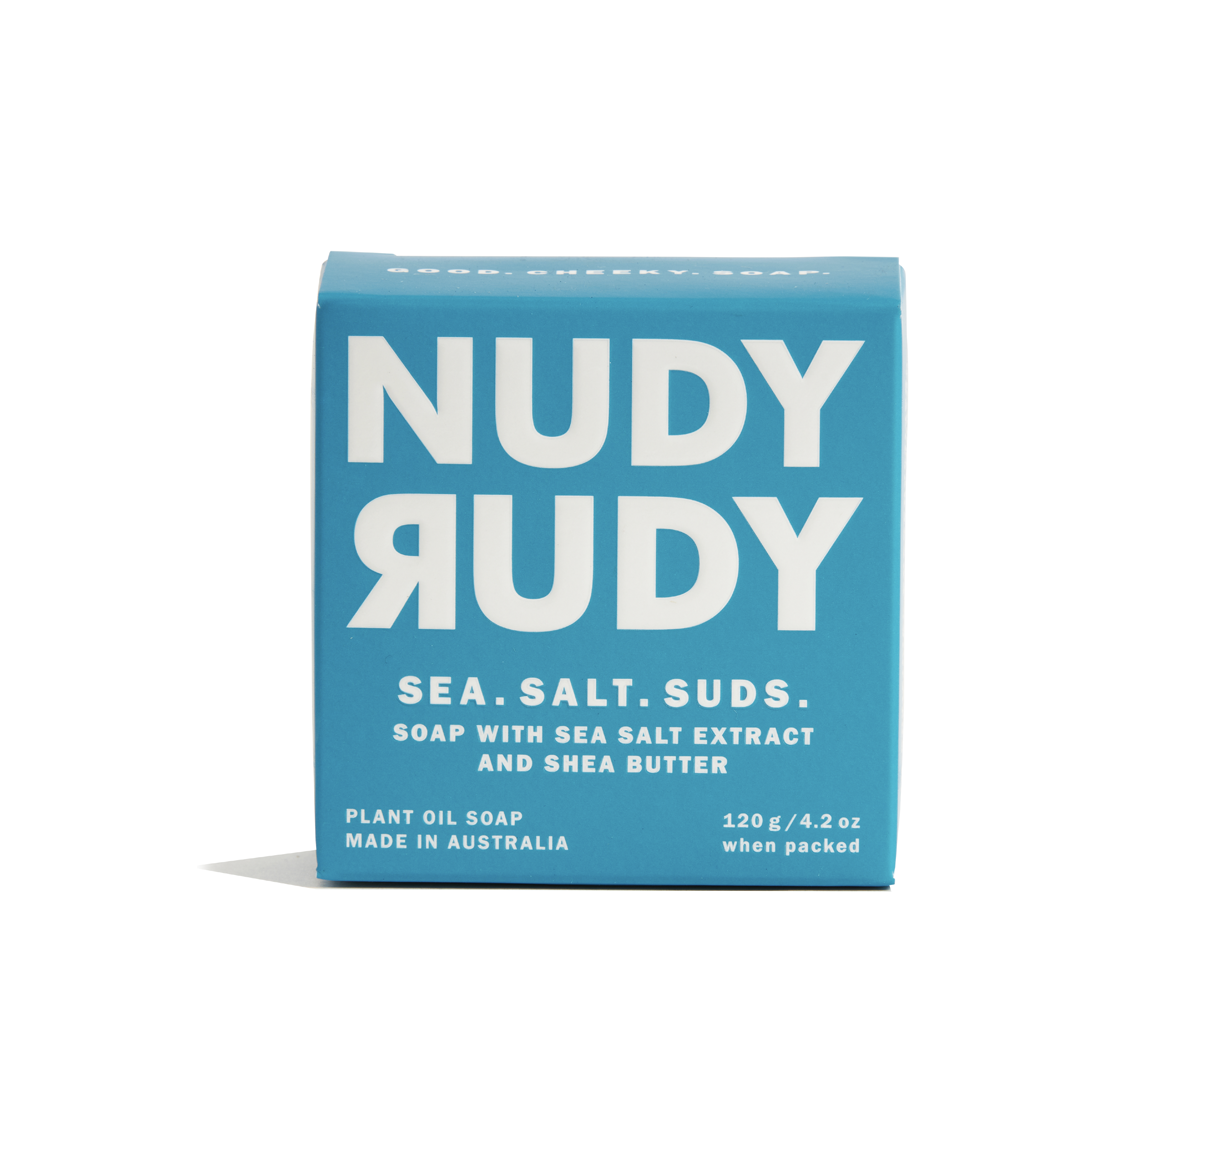 Sea. Salt. Suds. Bar Soap Puck - 6 Month